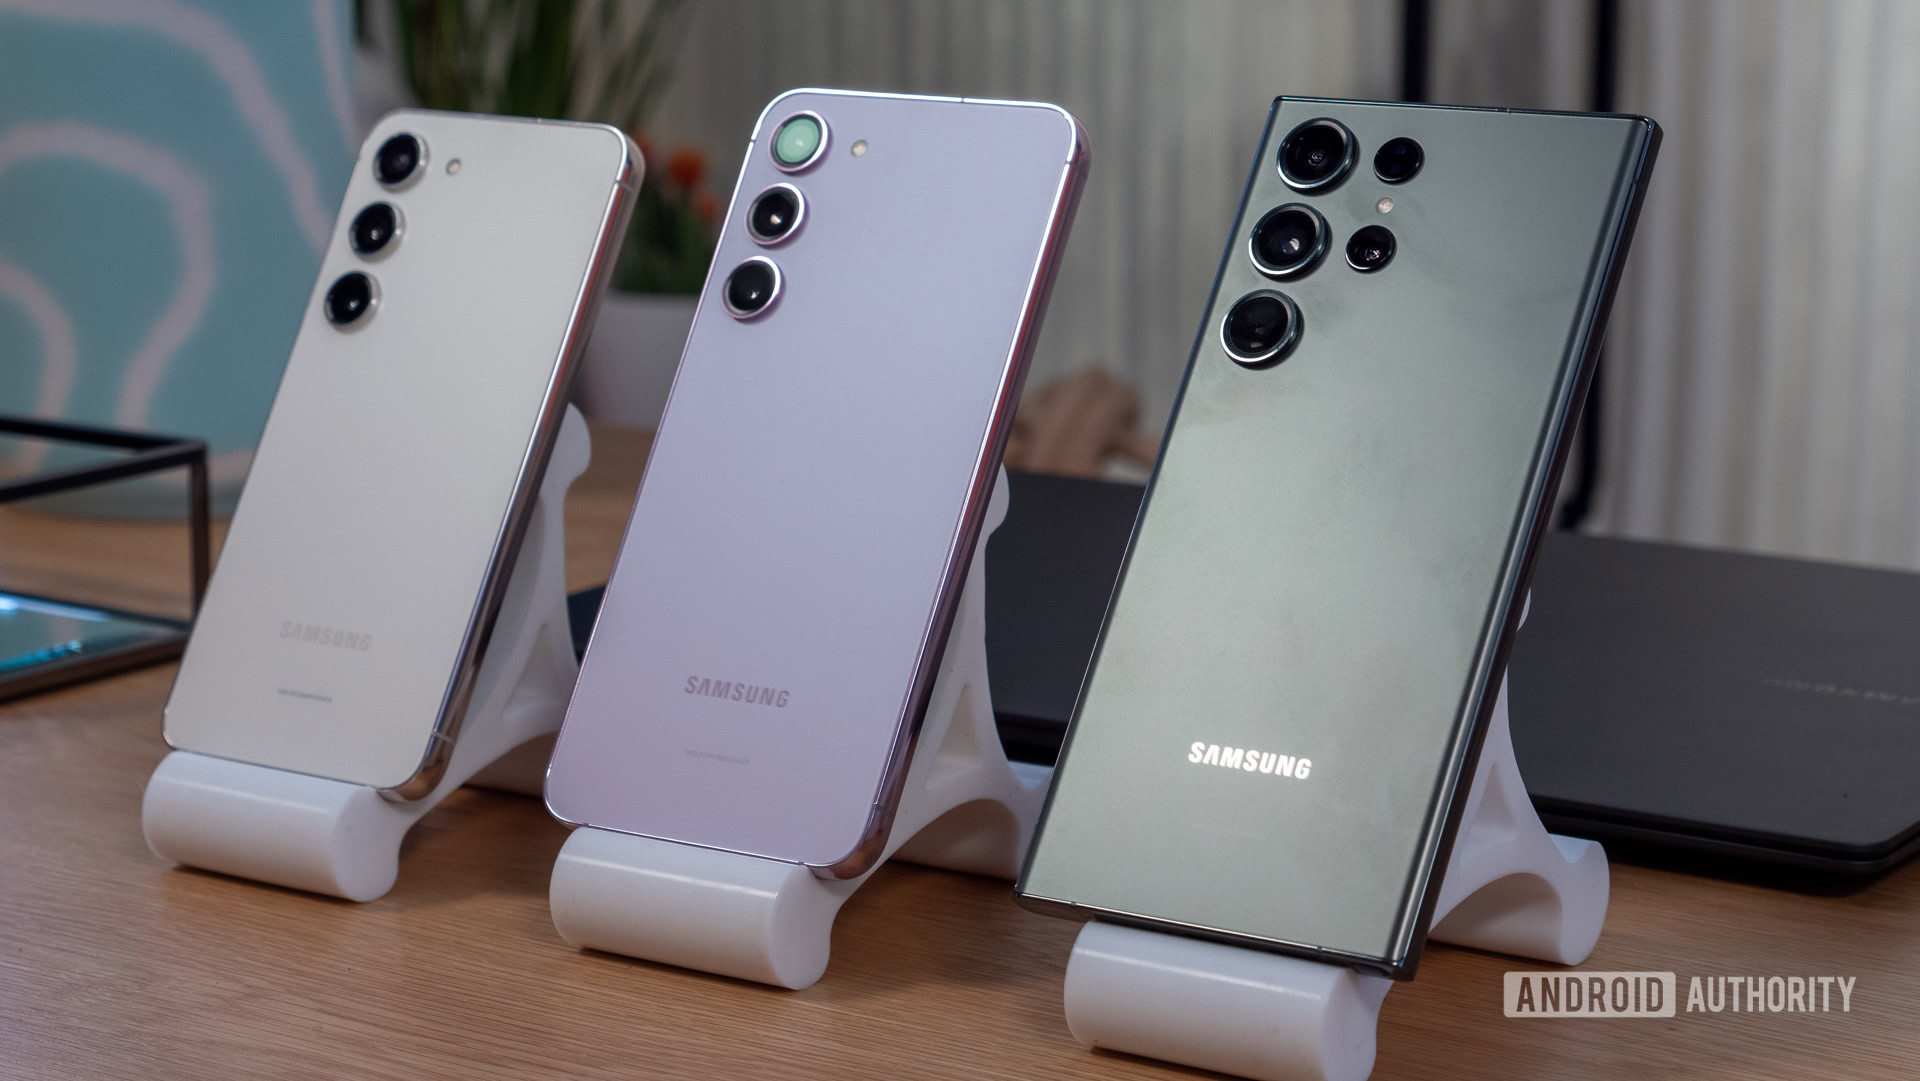 Samsung Galaxy S23 Ultra Review: 200 Megapixel Powerhouse